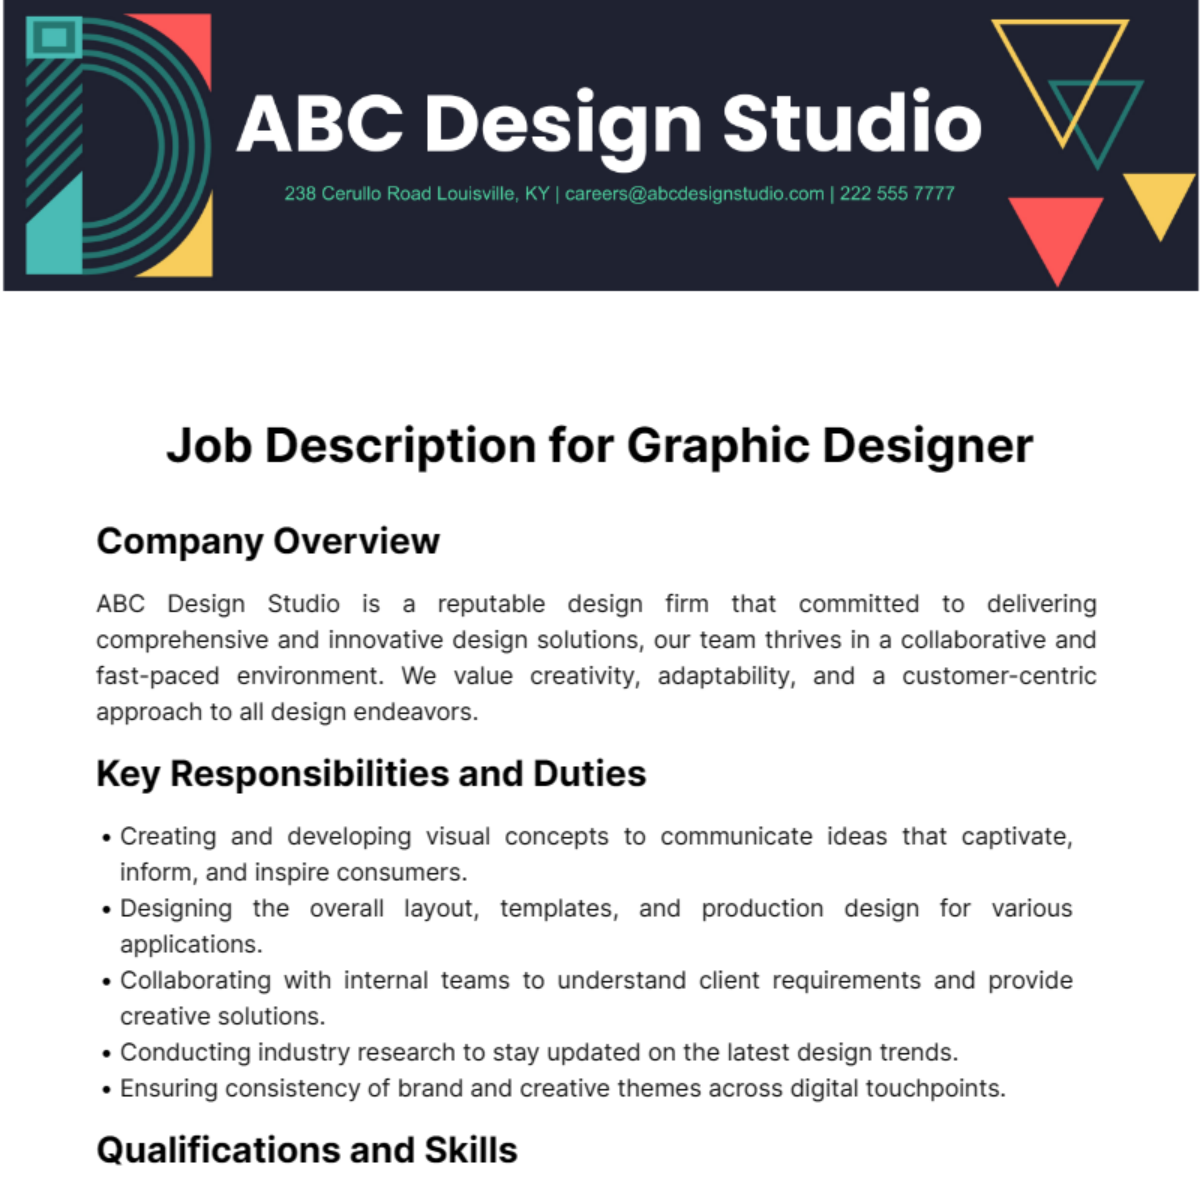 Job Description for Graphic Designer Template